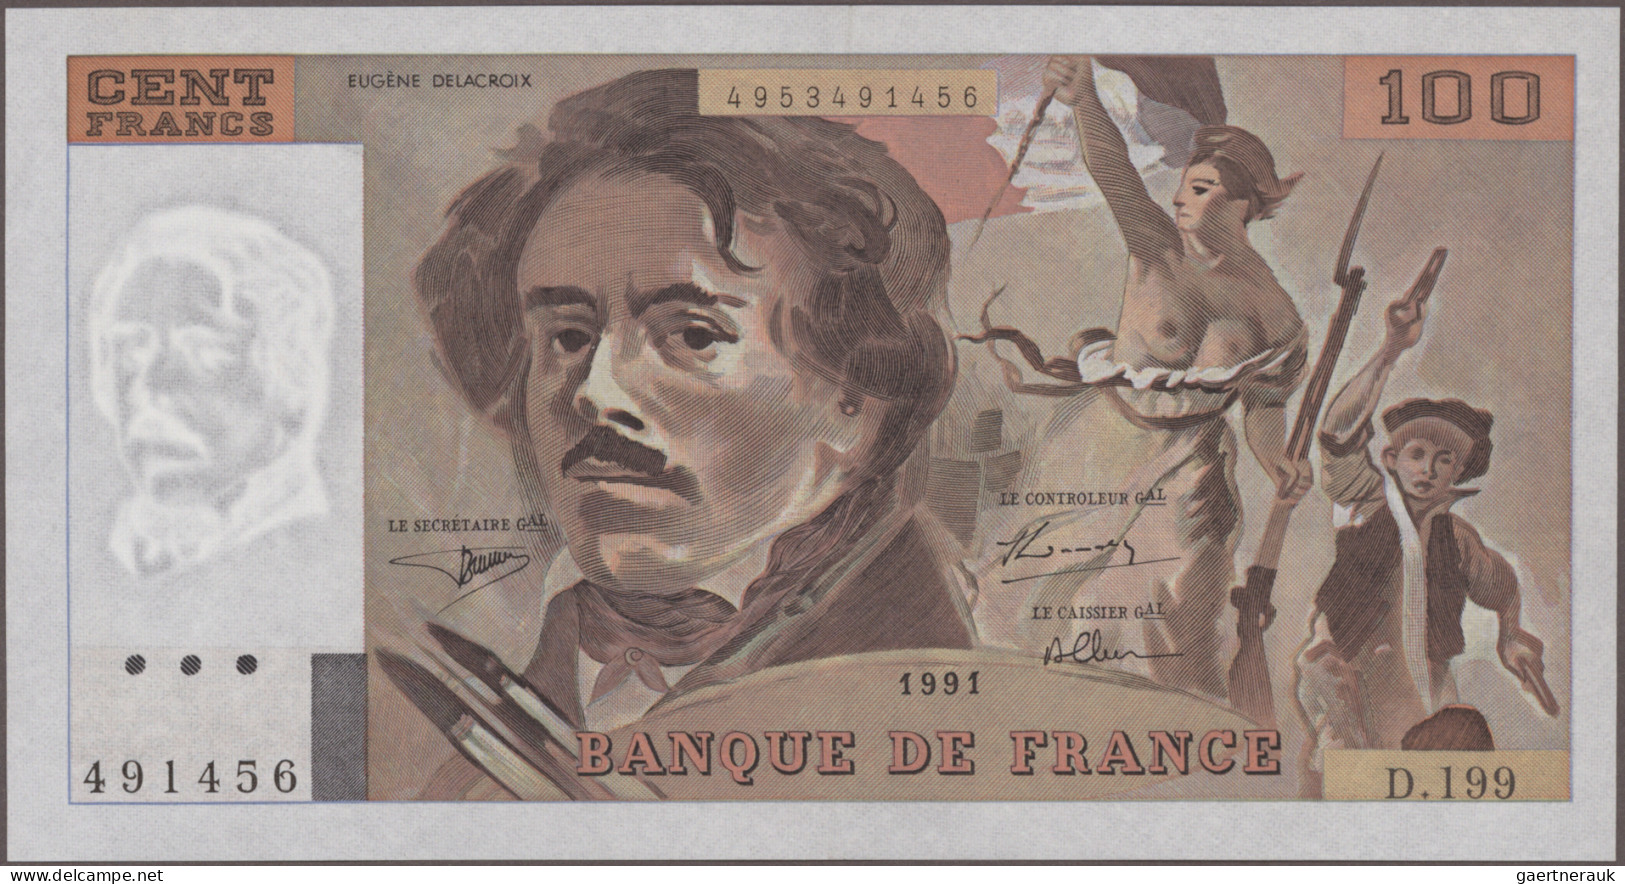 France: Banque de France, giant lot with 33 banknotes, series 1966-1997, compris